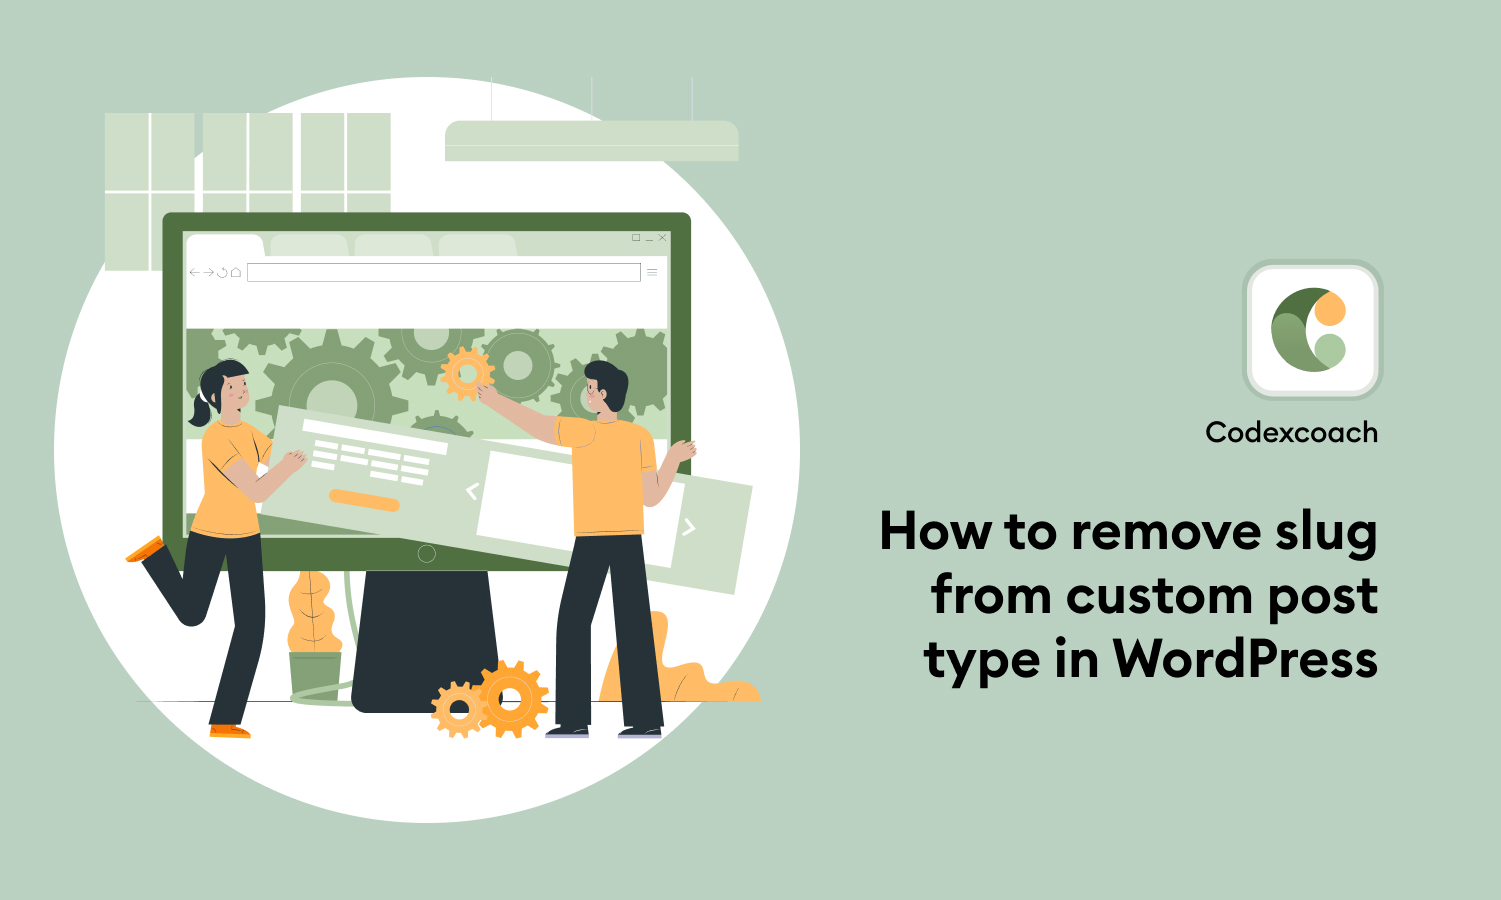 How to remove slug from custom post type in WordPress